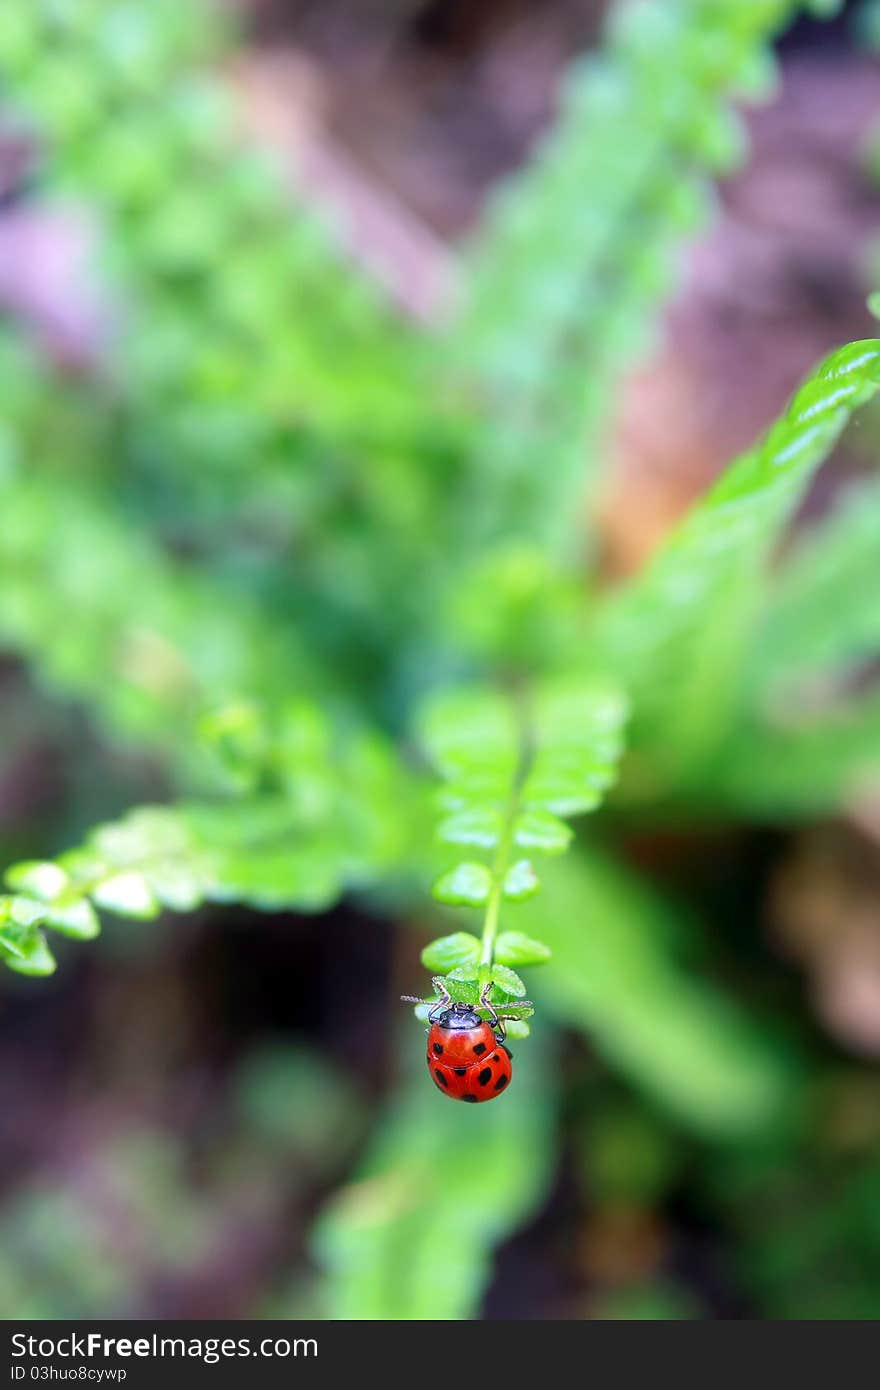 Ladybug on the top of fern leaf